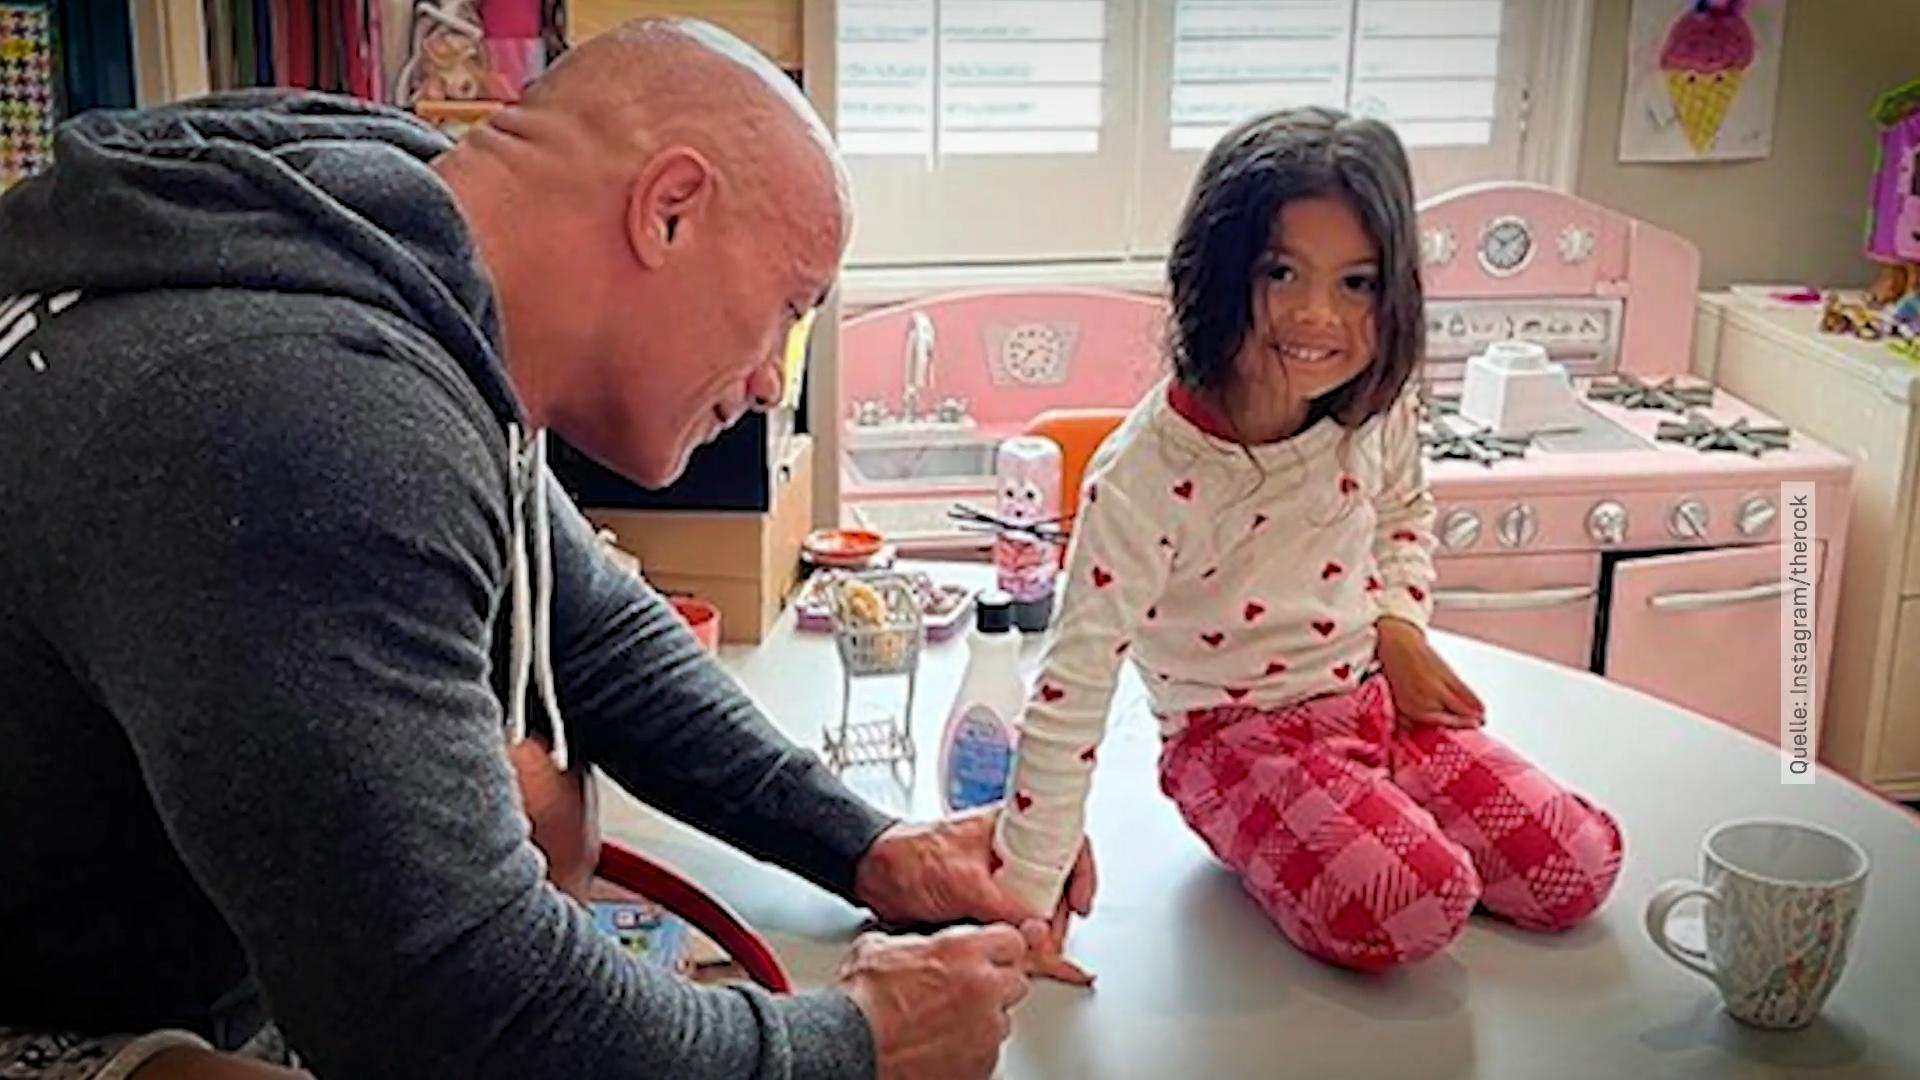 Dwayne Johnson lackiert Tochter die Nägel "The Rock" als Super-Dad